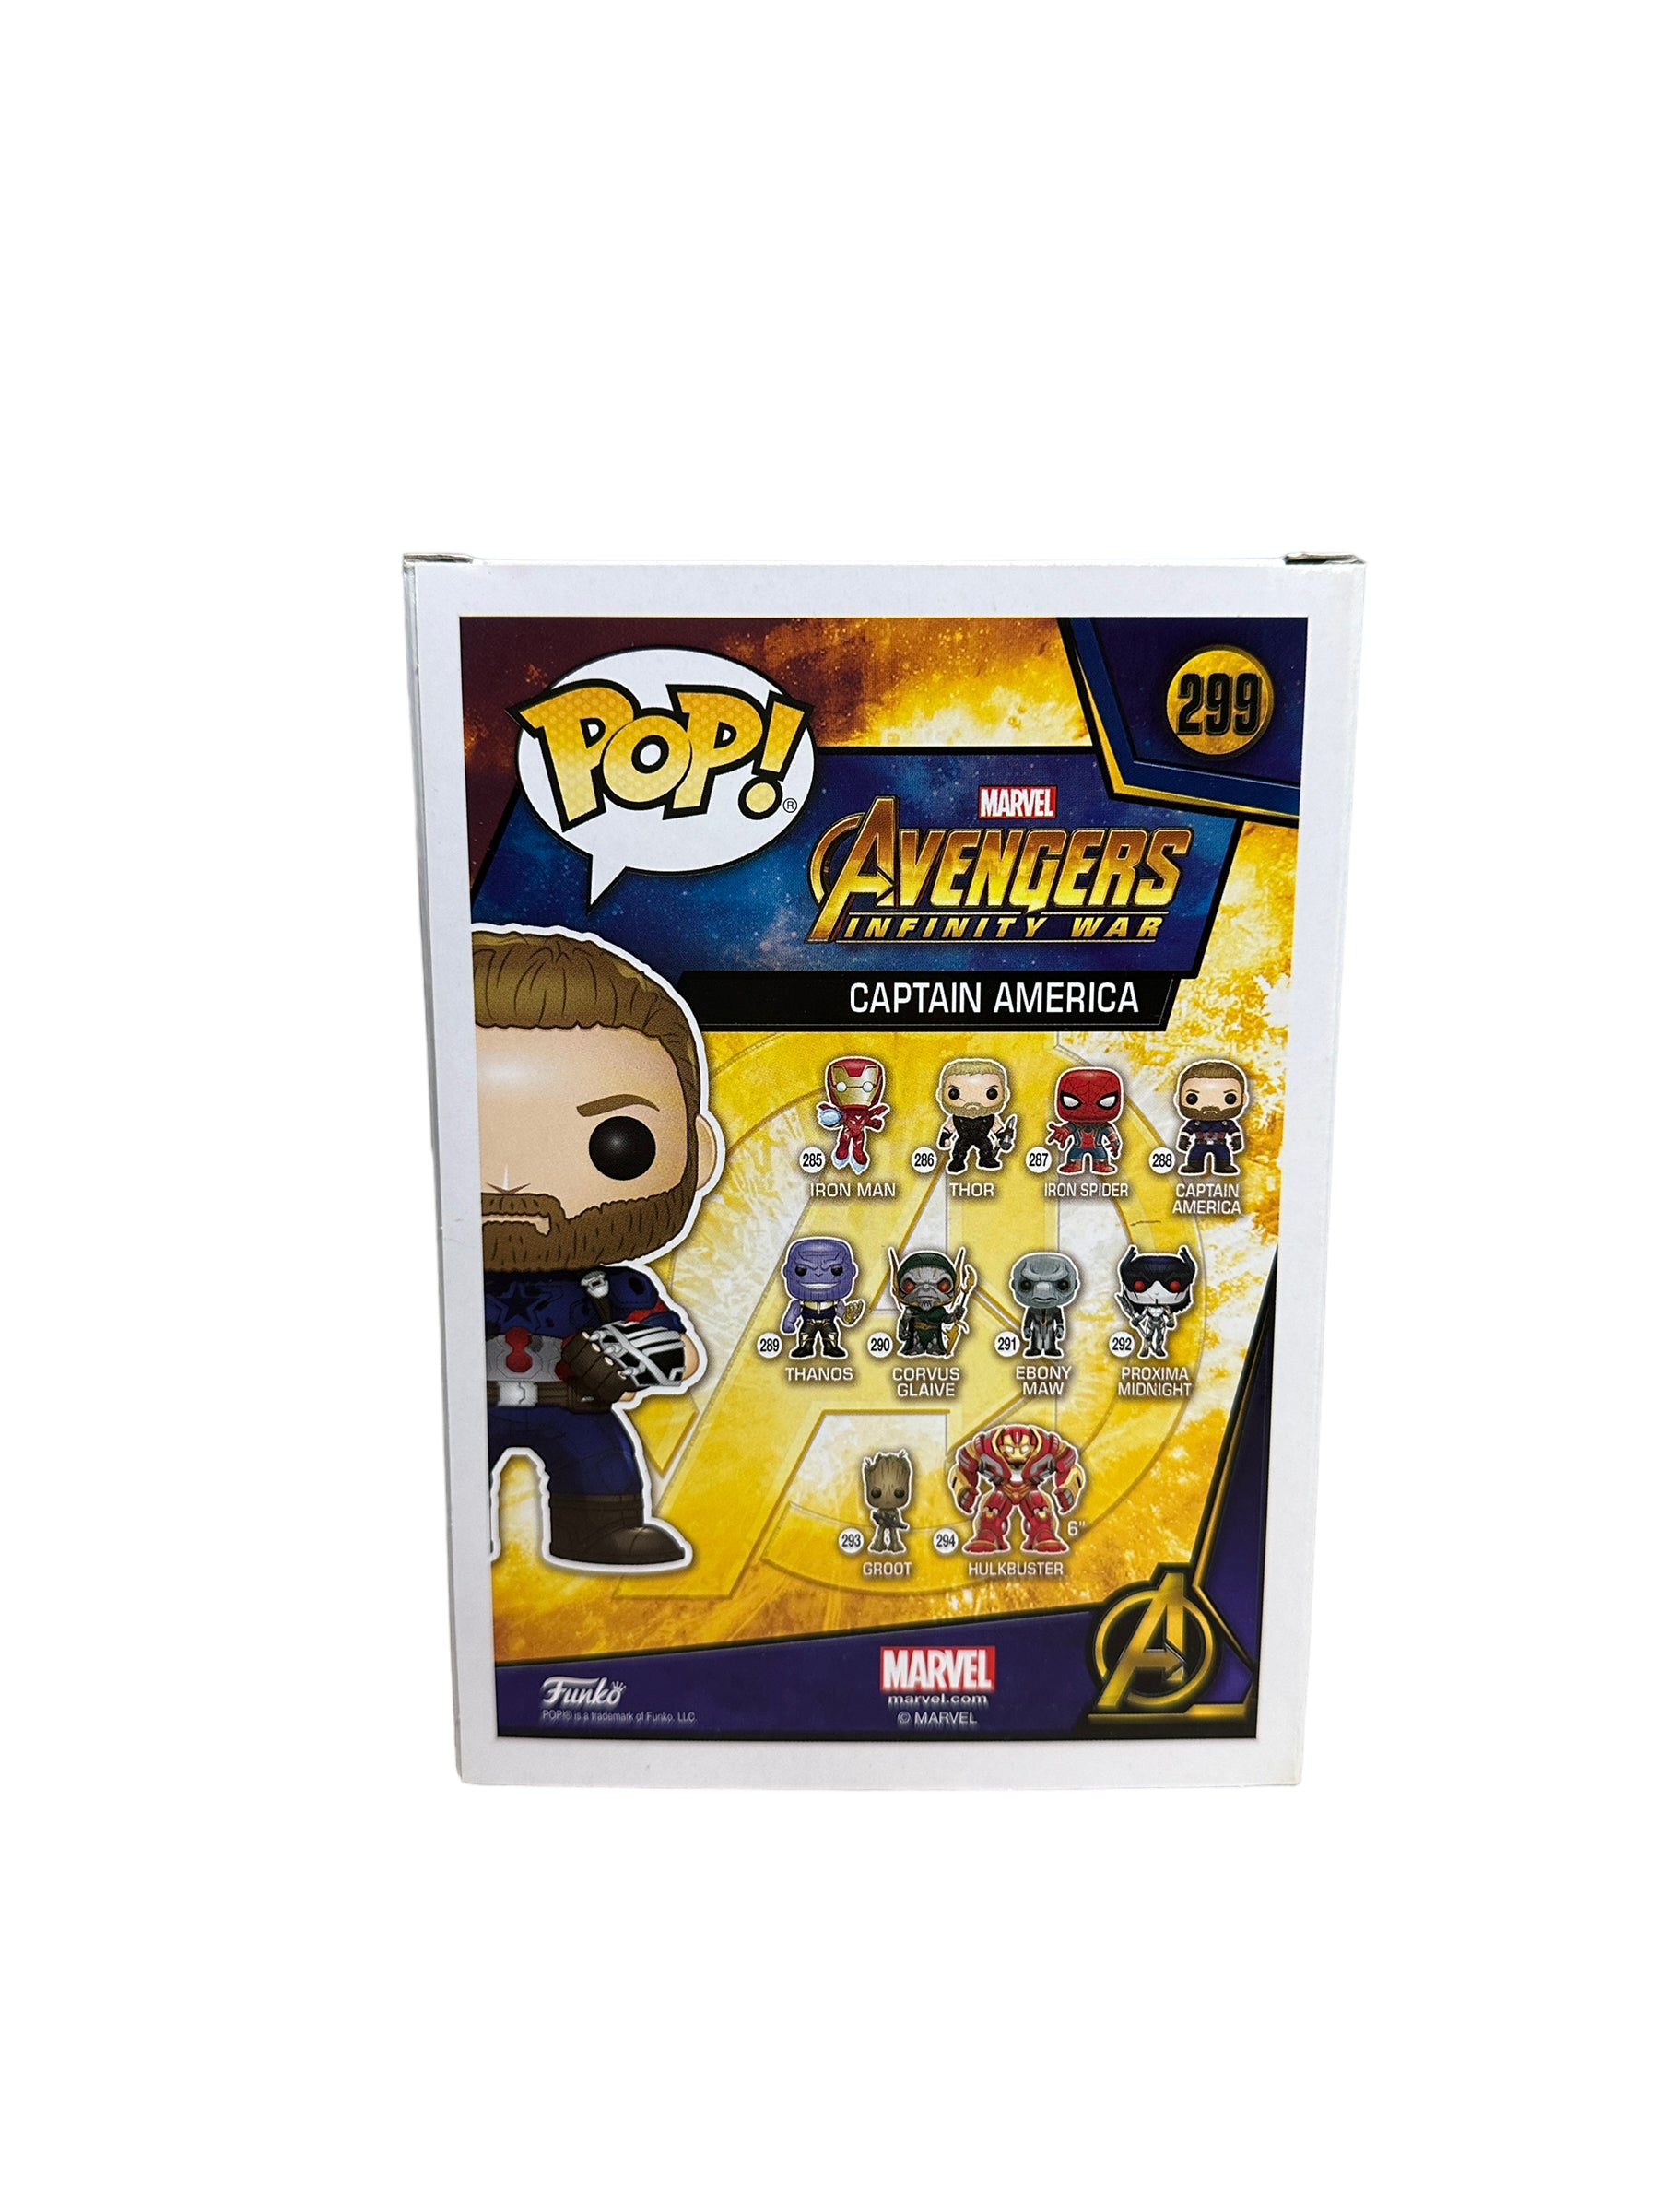 Captain America #299 (Action Pose) Funko Pop! - Avengers Infinity War - Walmart Exclusive - Condition 8.75/10